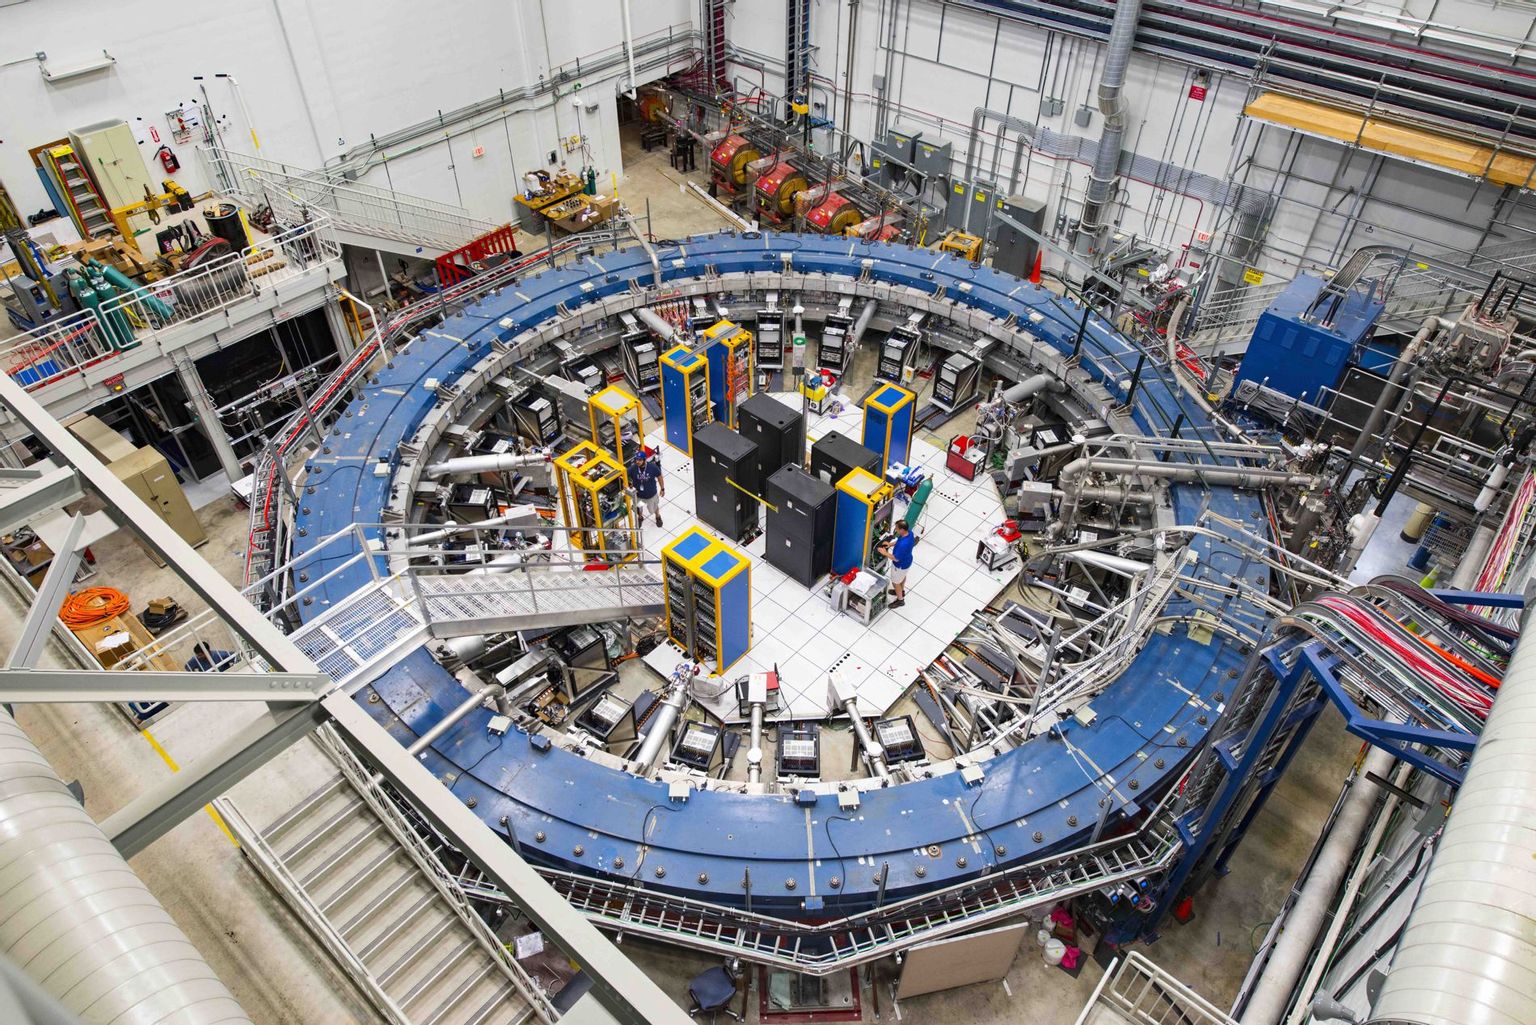 Muon storage ring at Fermilab